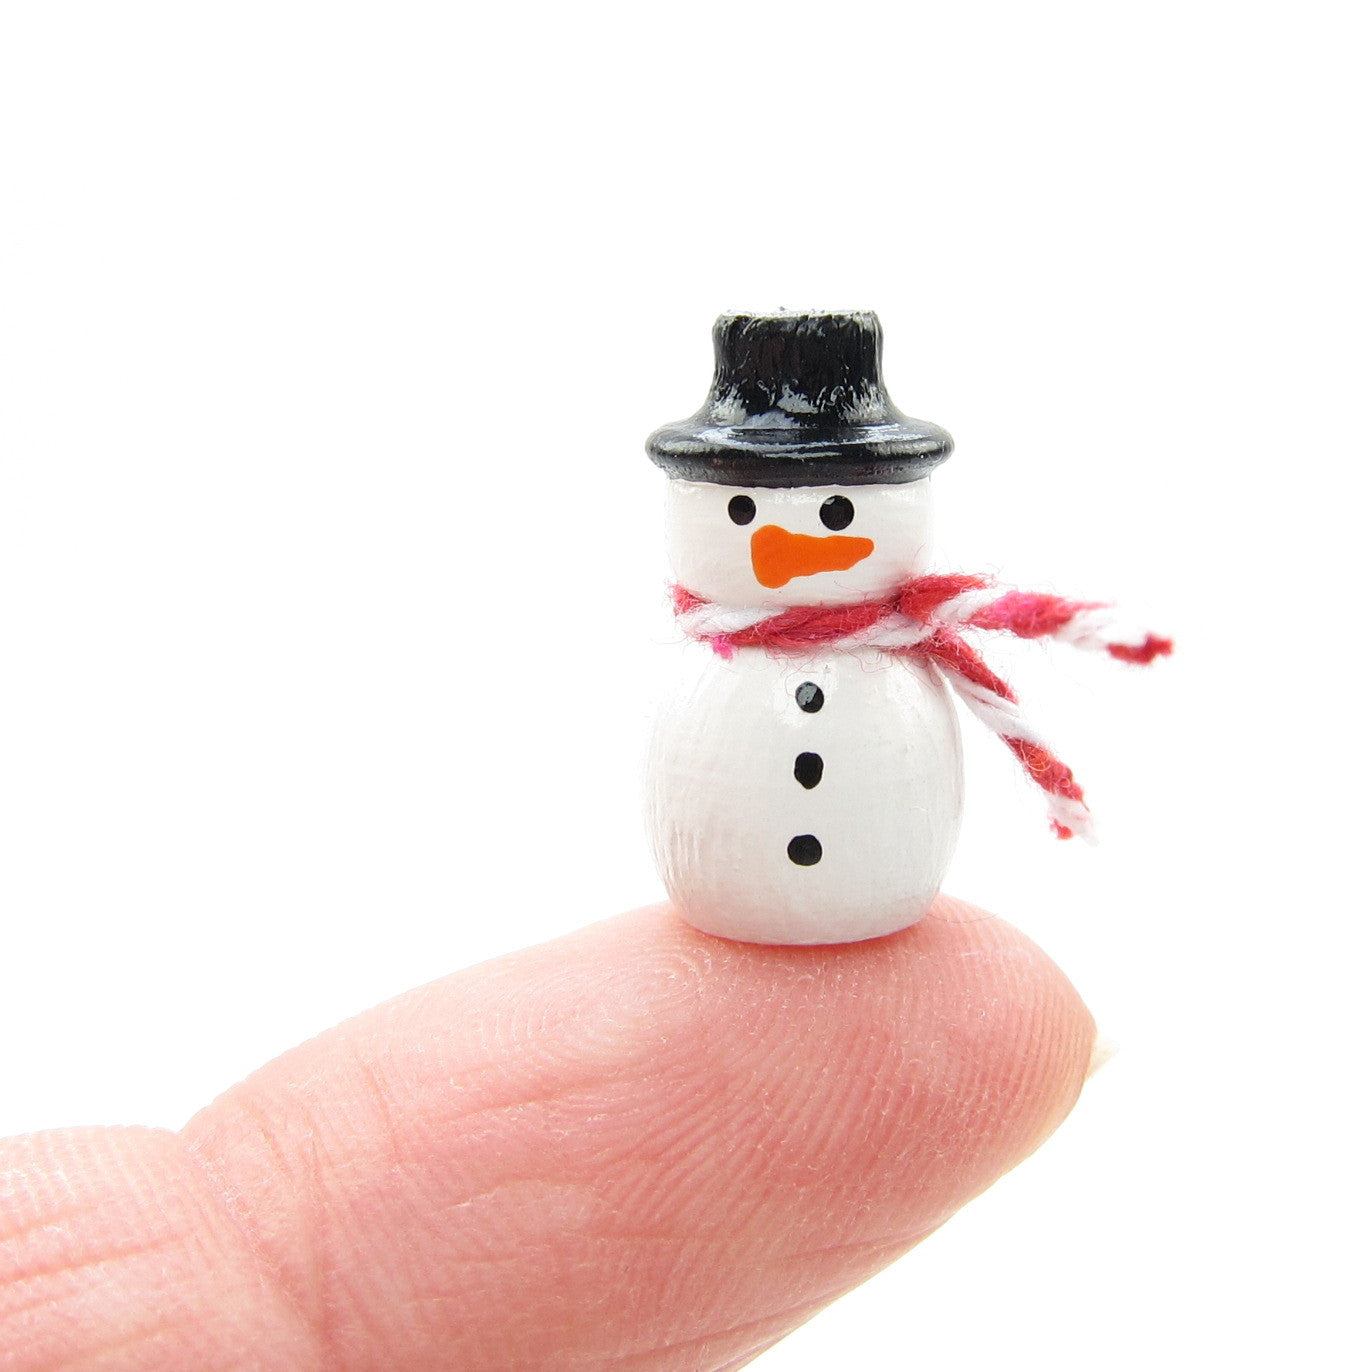 Miniature wooden hand painted snowman figurine